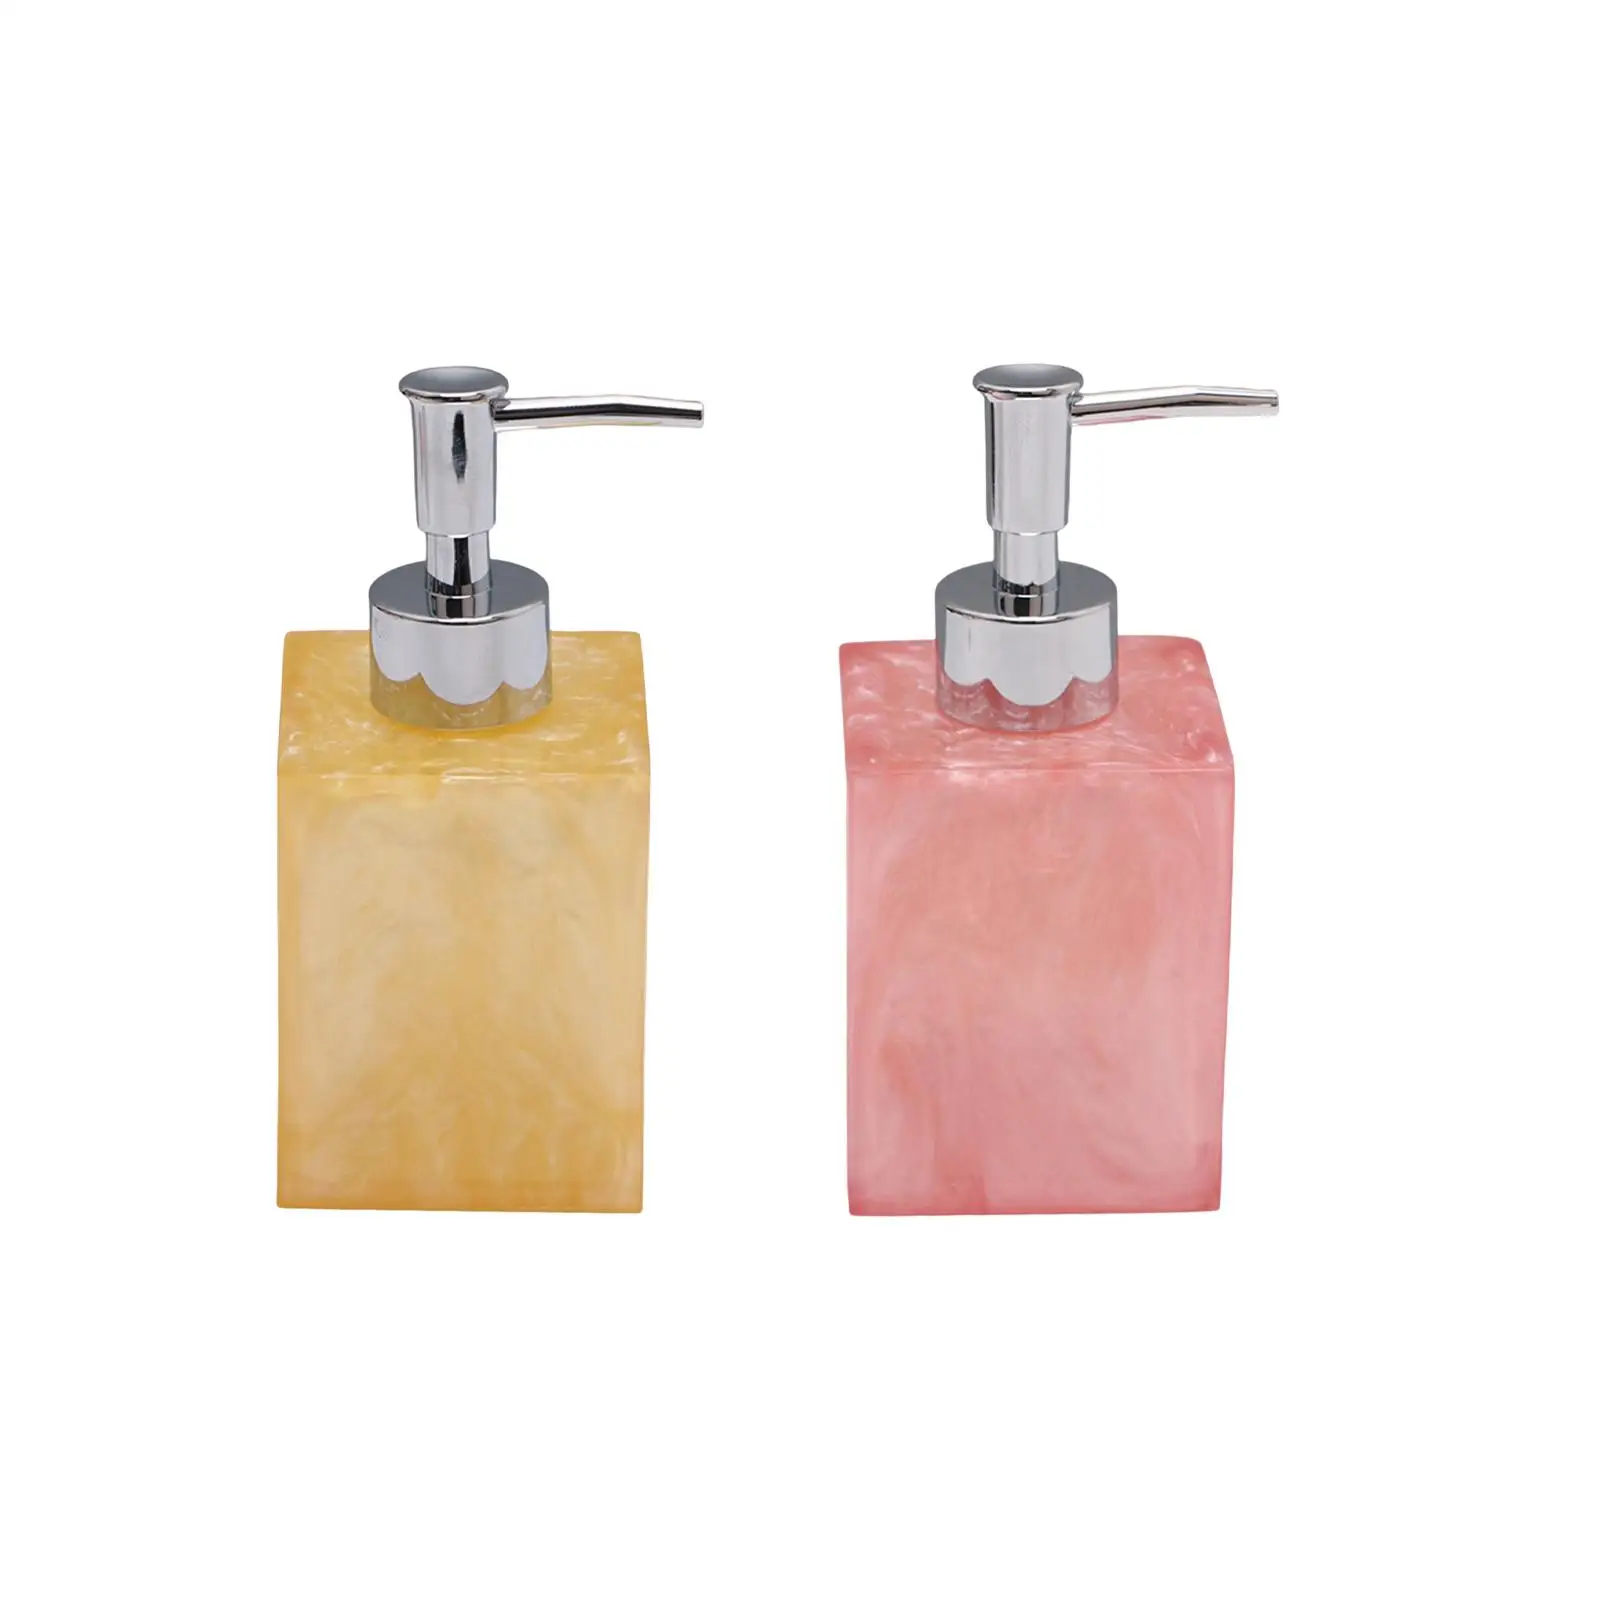 Liquid Soap Dispenser Pump Bottle Marble Texture for Washing Soap Shampoo Lotion